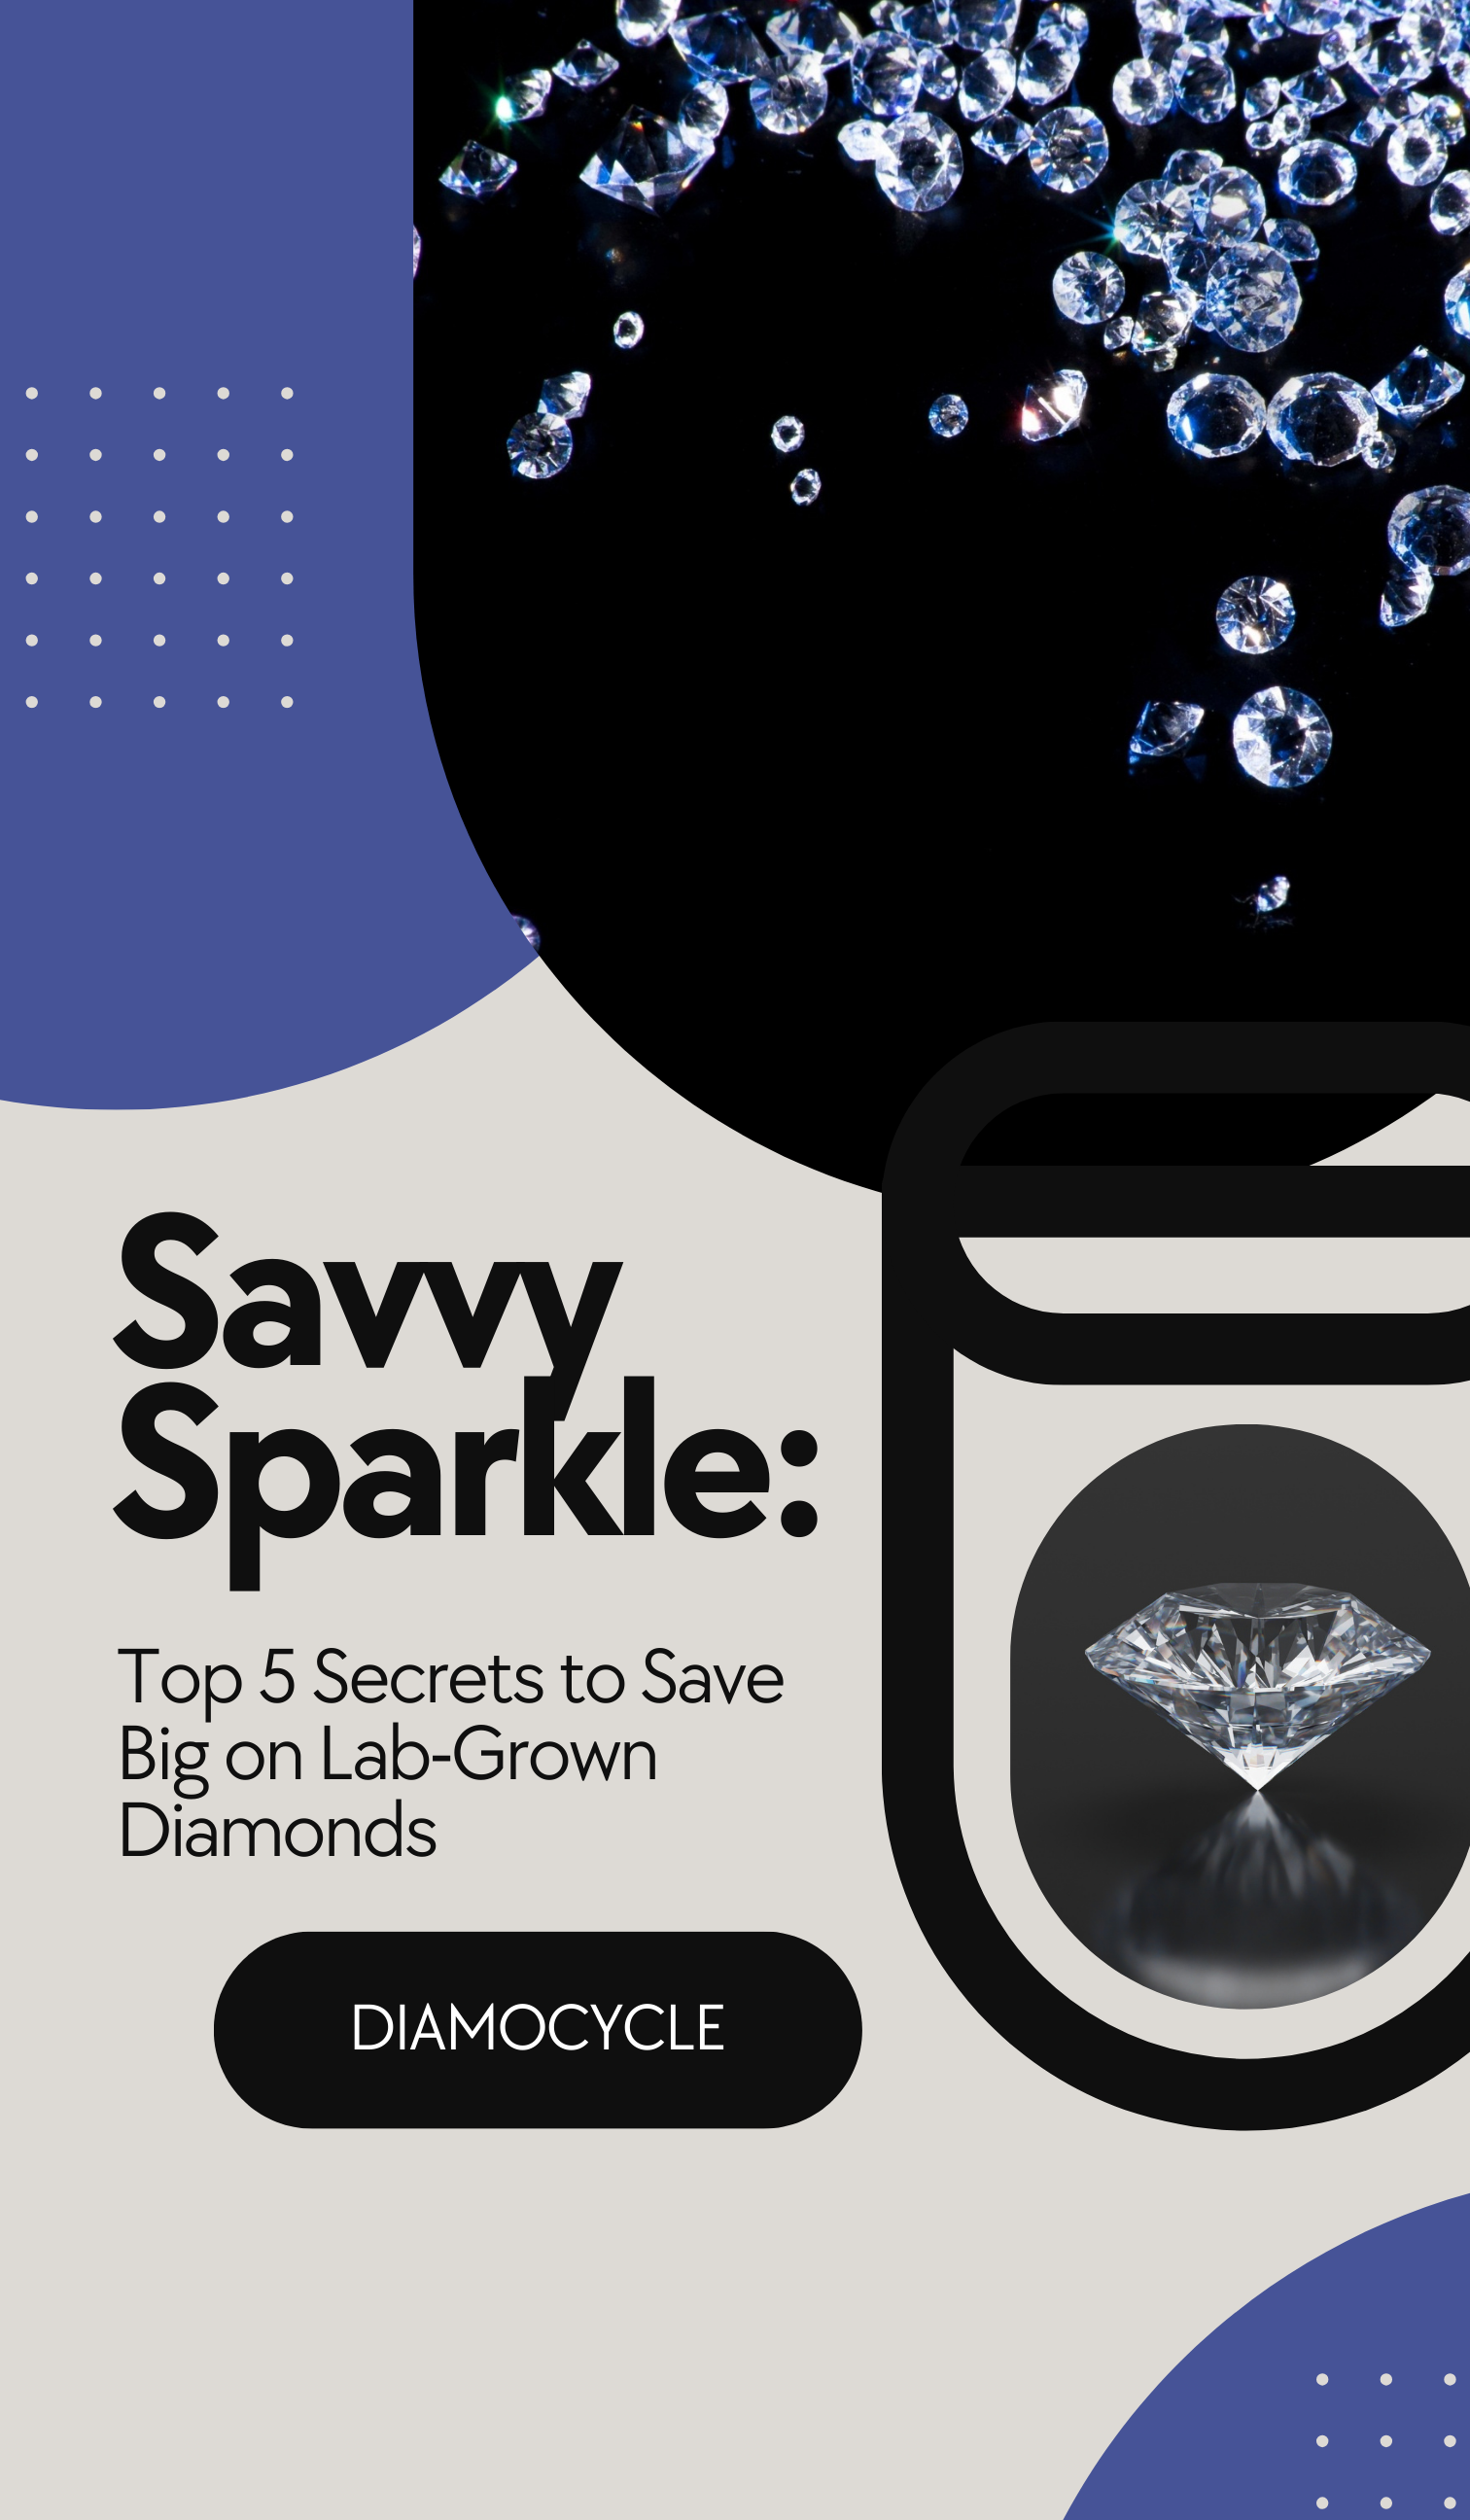 “Savvy Sparkle: Top 5 Secrets to Save Big on Lab-Grown Diamonds”